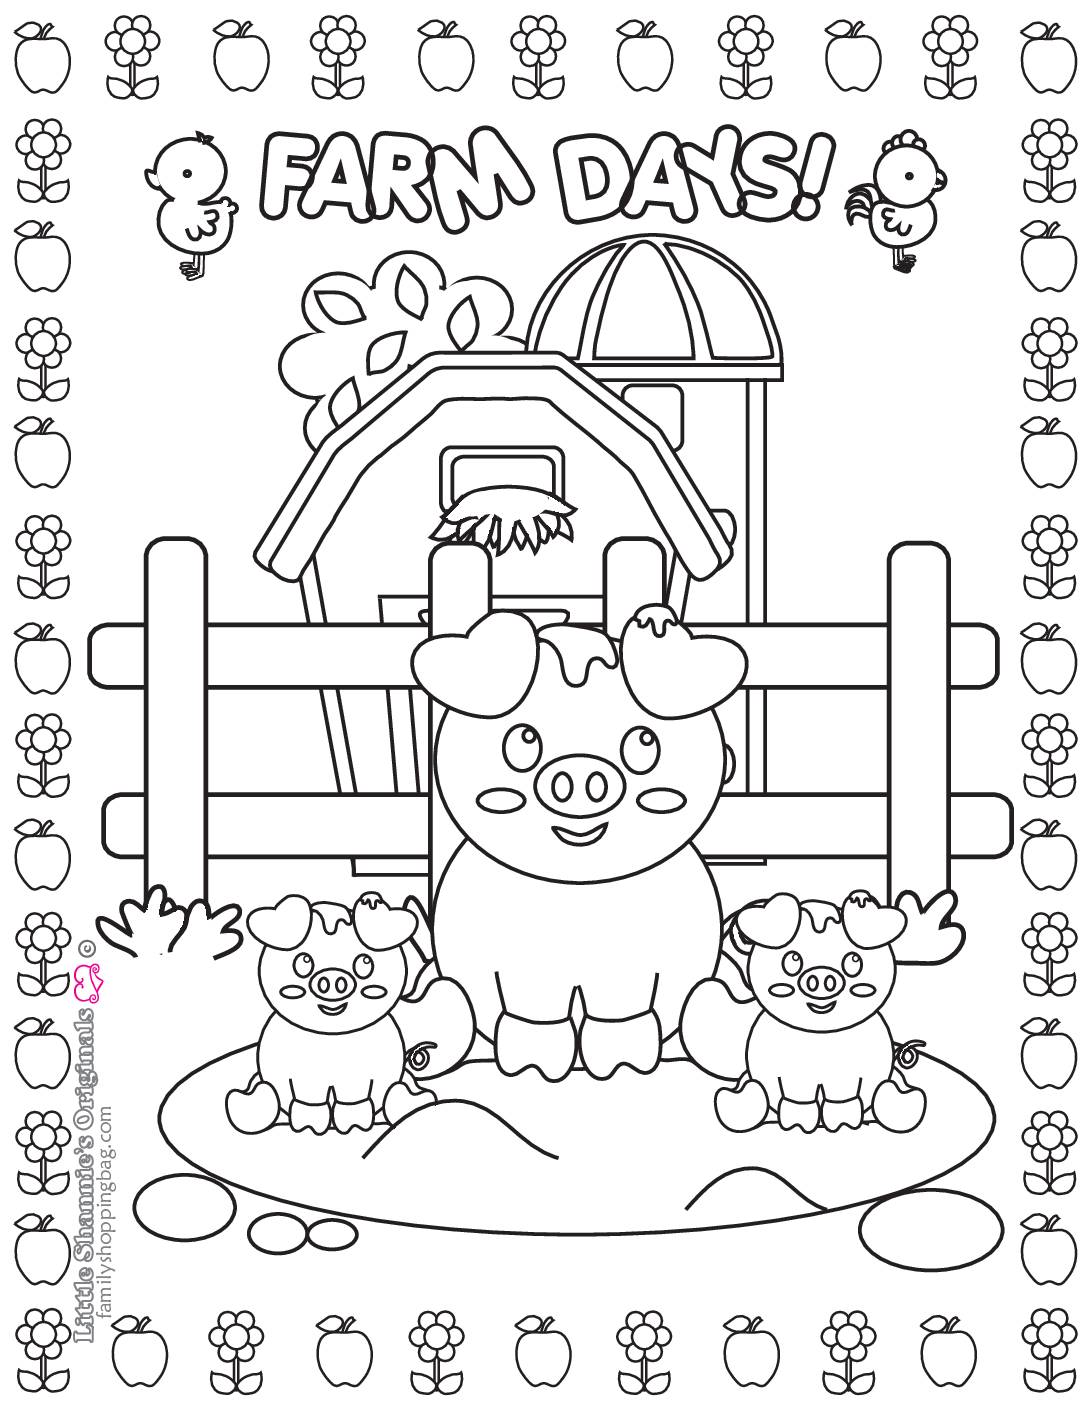 Coloring Page 6 Farm